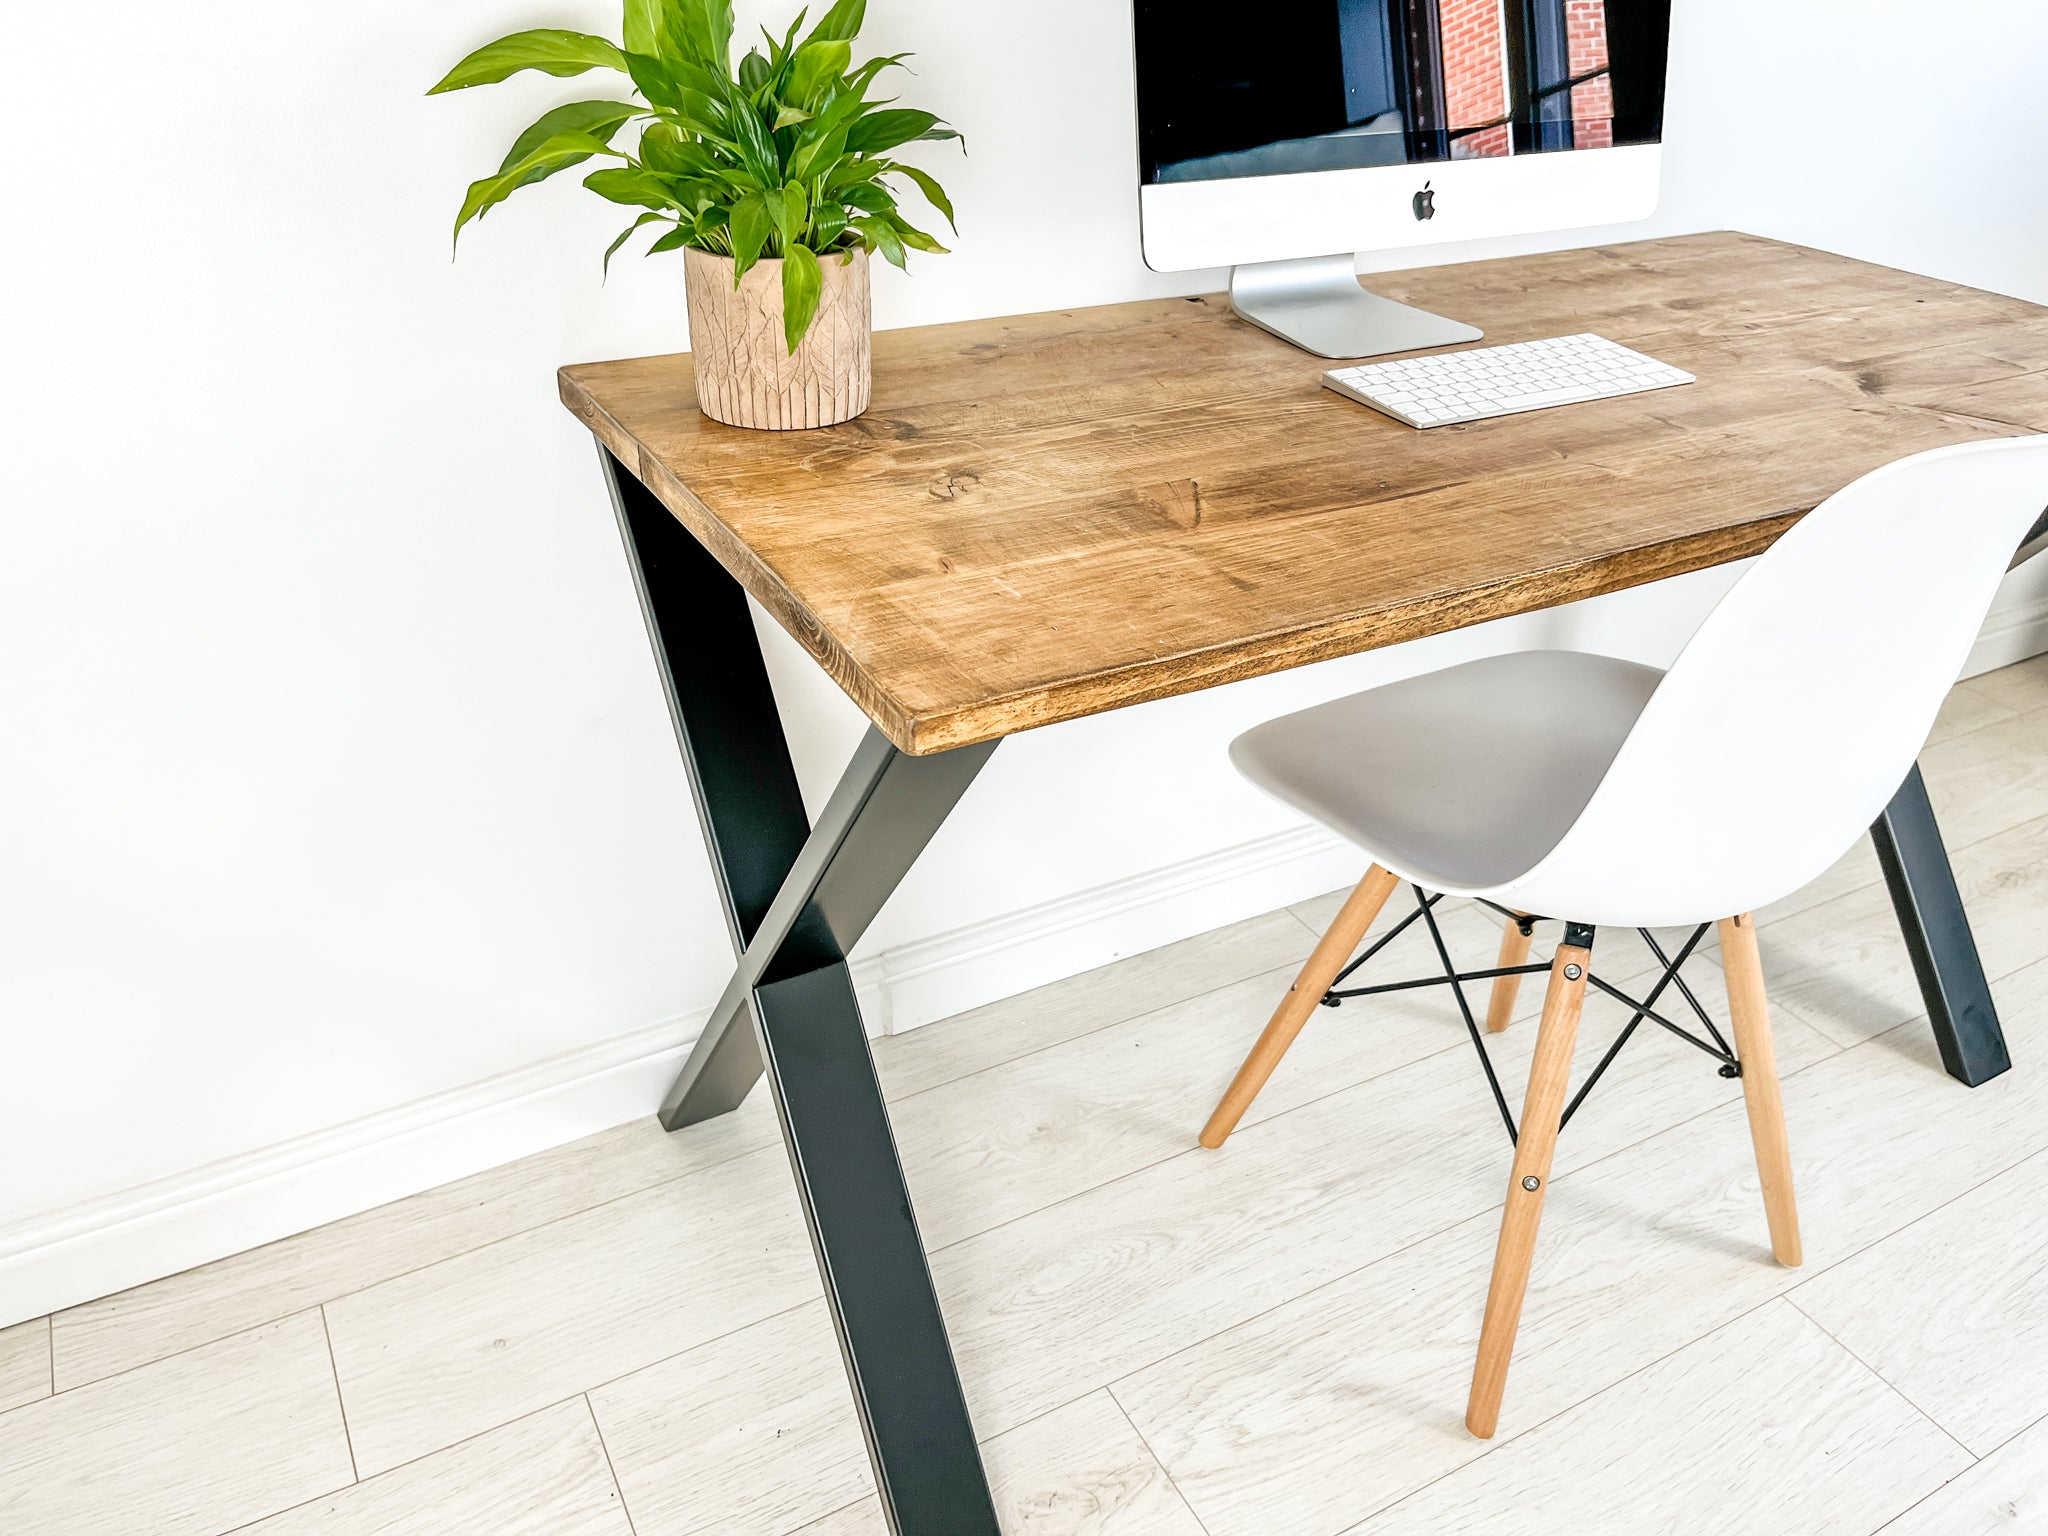 Rustic Wood Desk with Steel X-Frame Legs